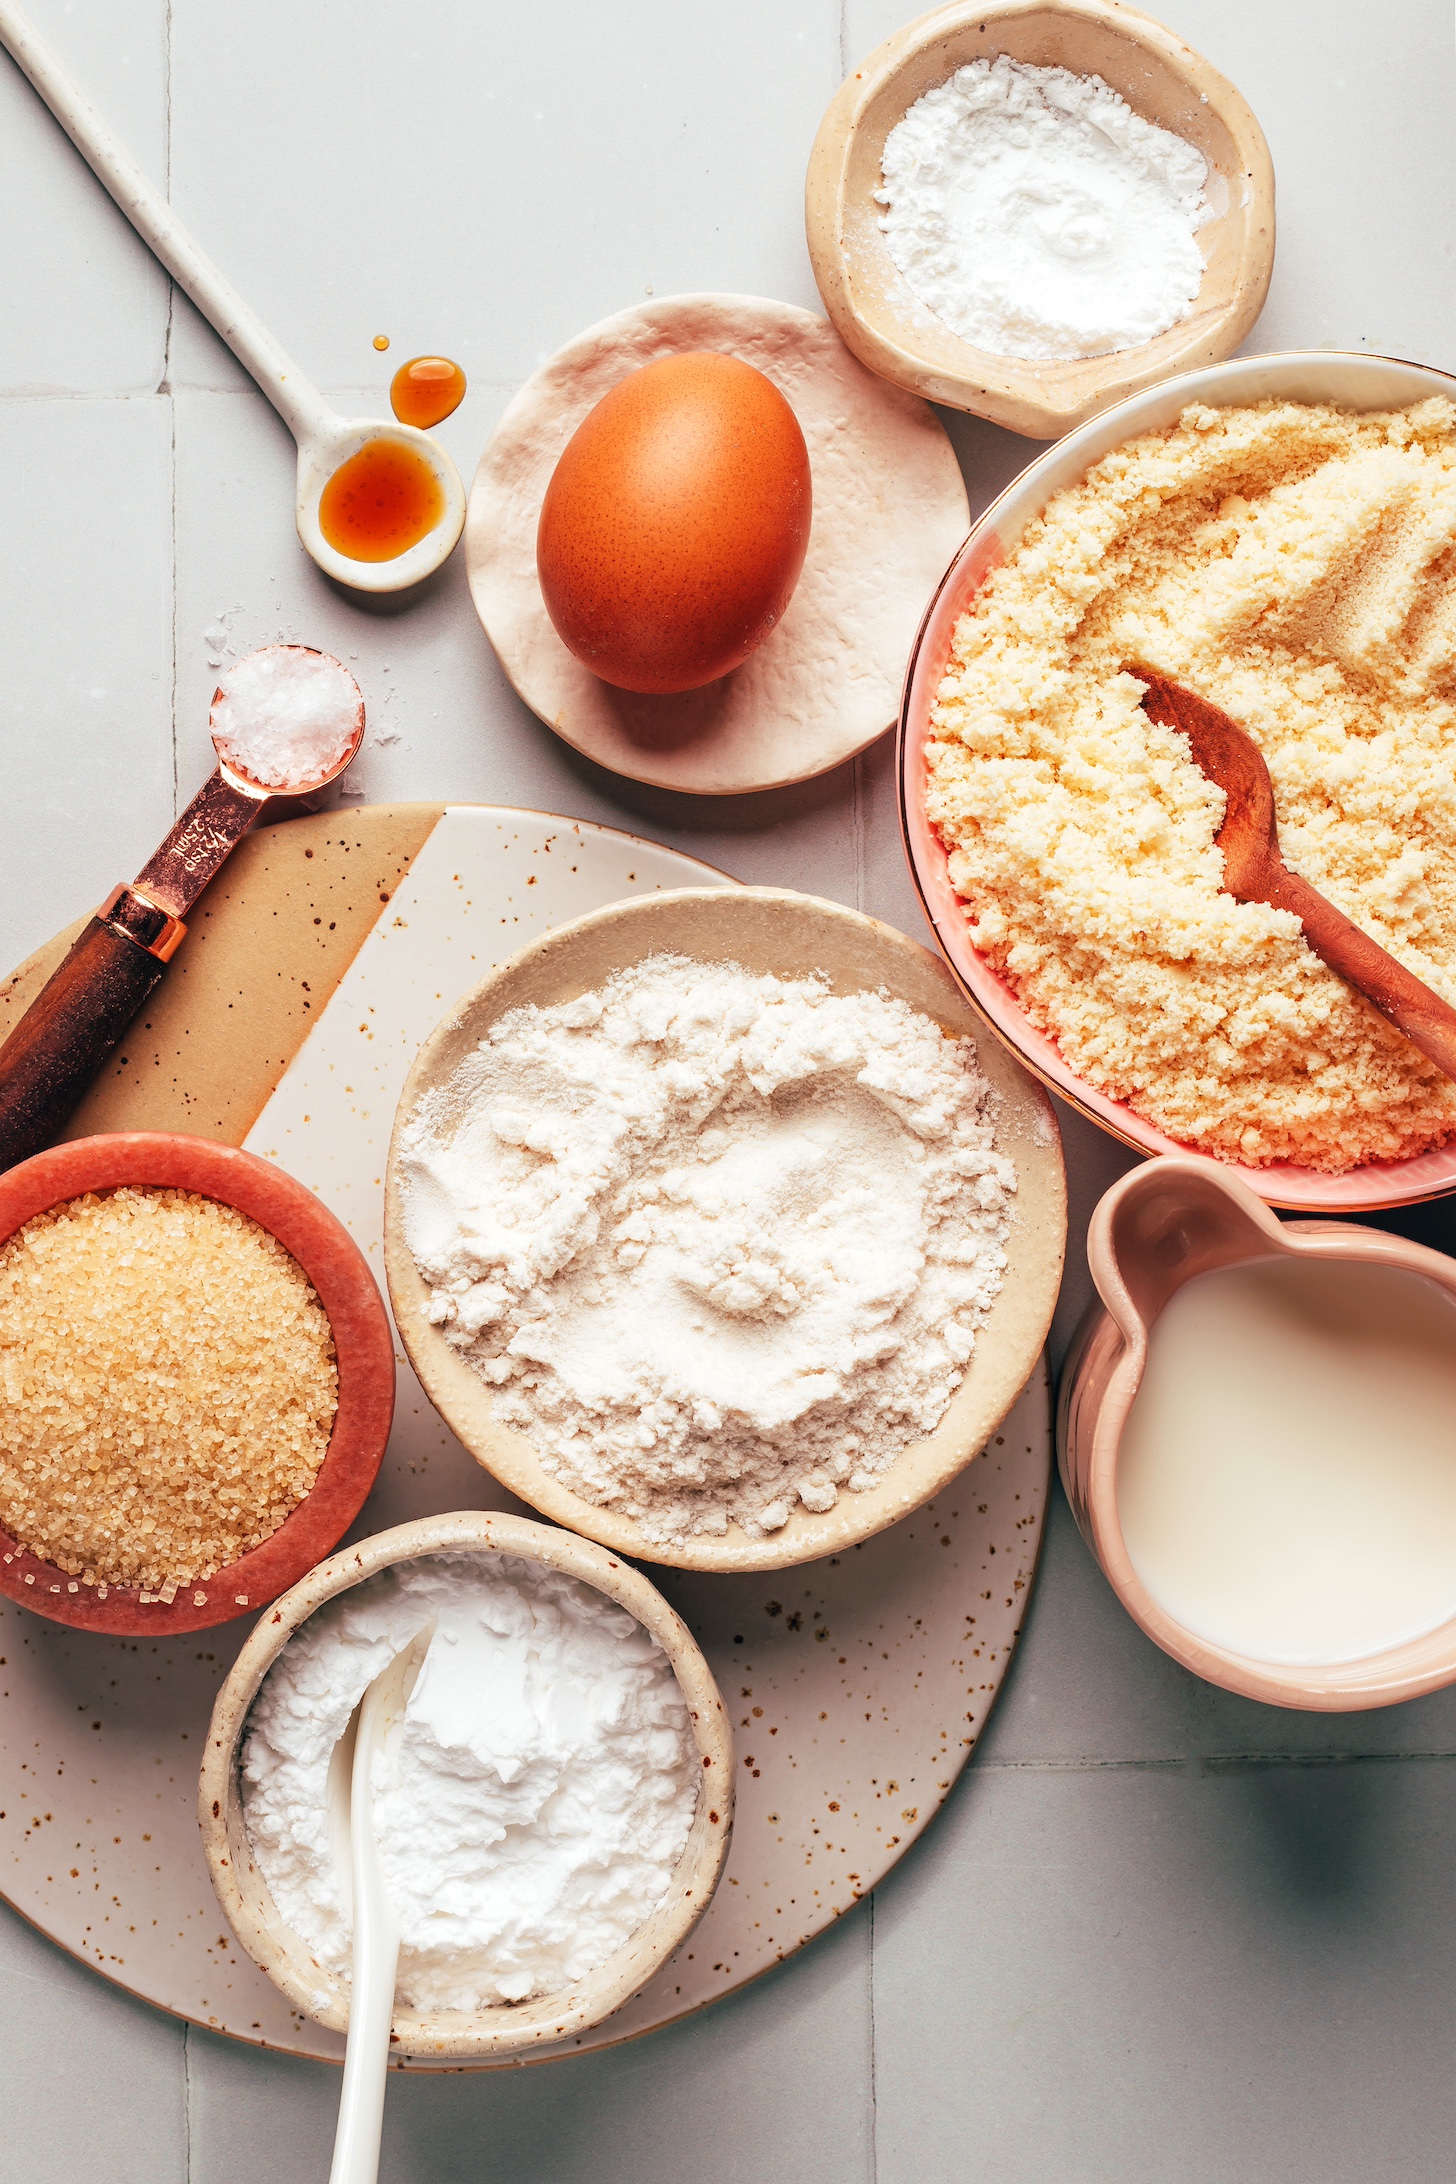 Almond flour, almond milk, brown rice flour, potato starch, cane sugar, salt, vanilla, egg, and baking powder